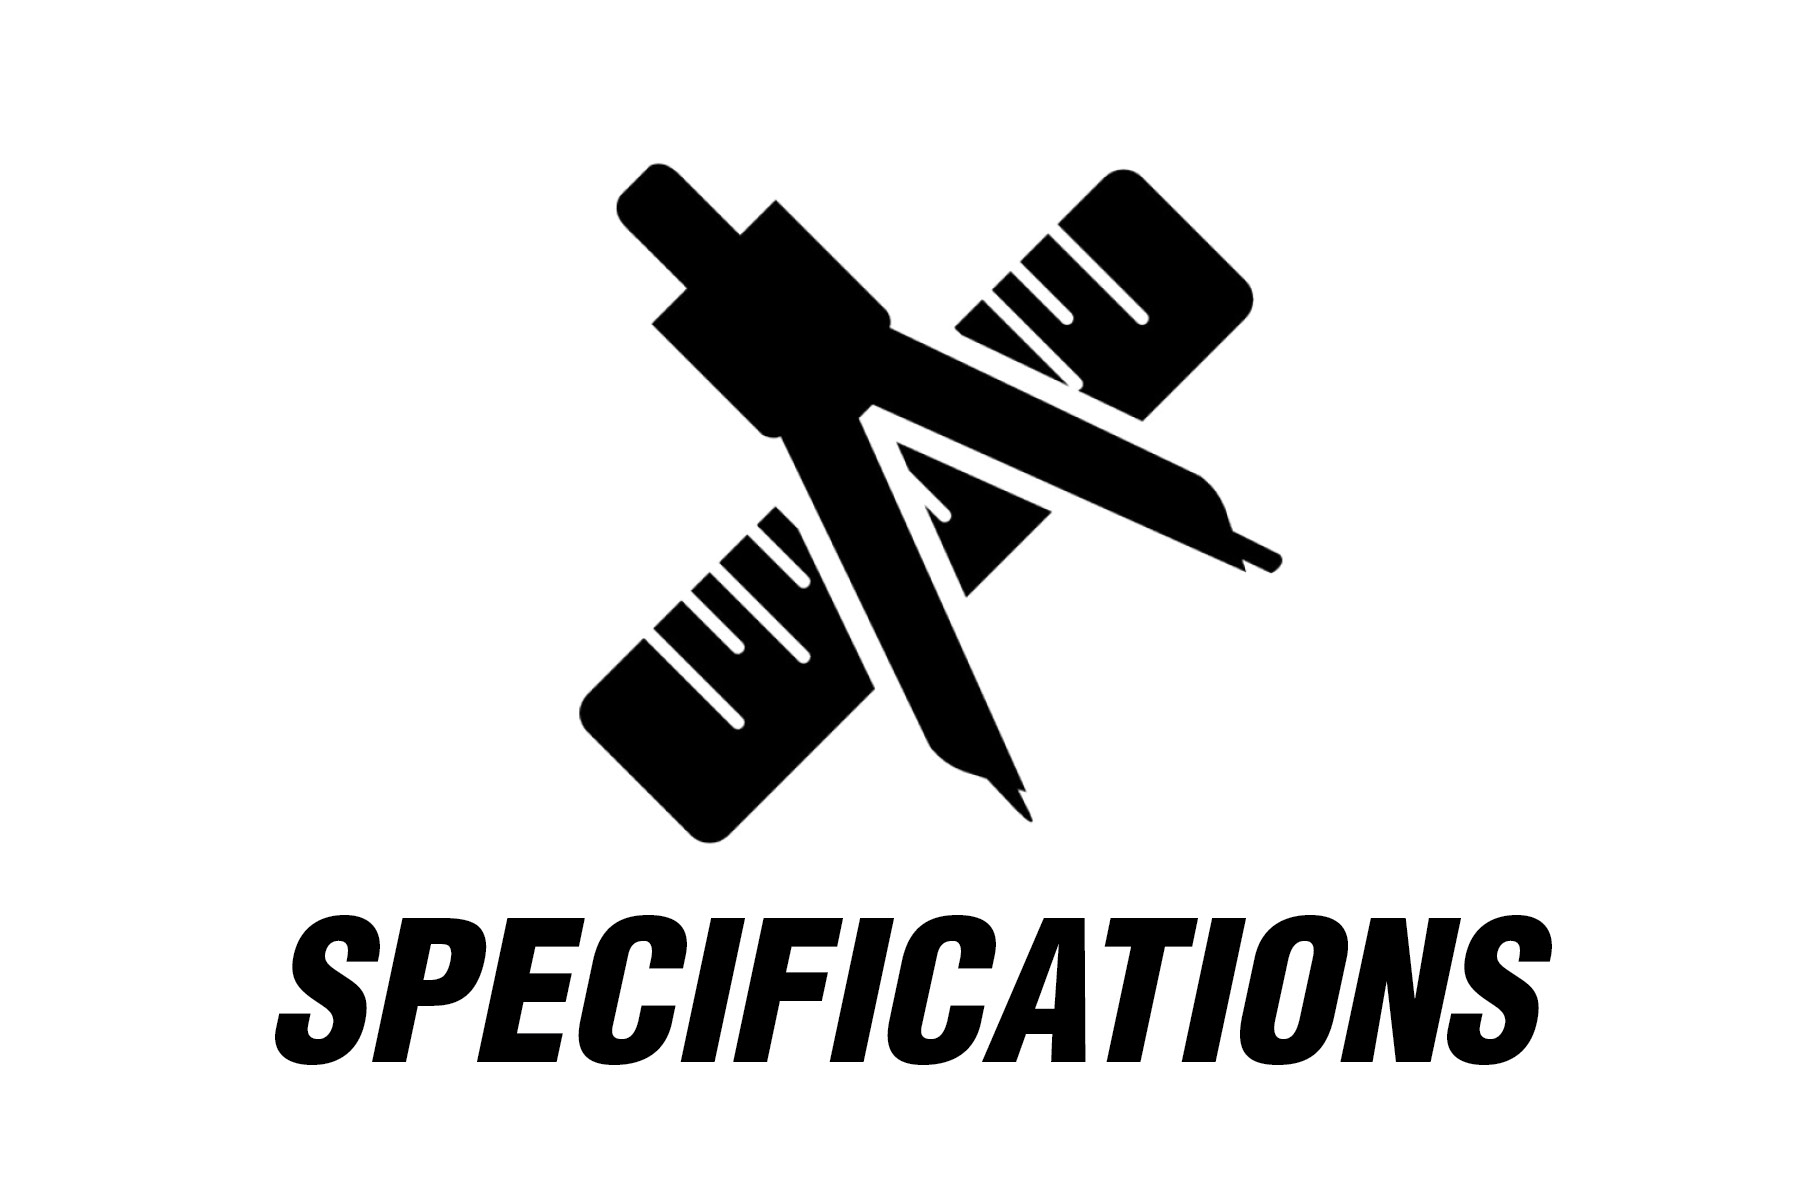 Specifications (Copy) (Copy) (Copy)